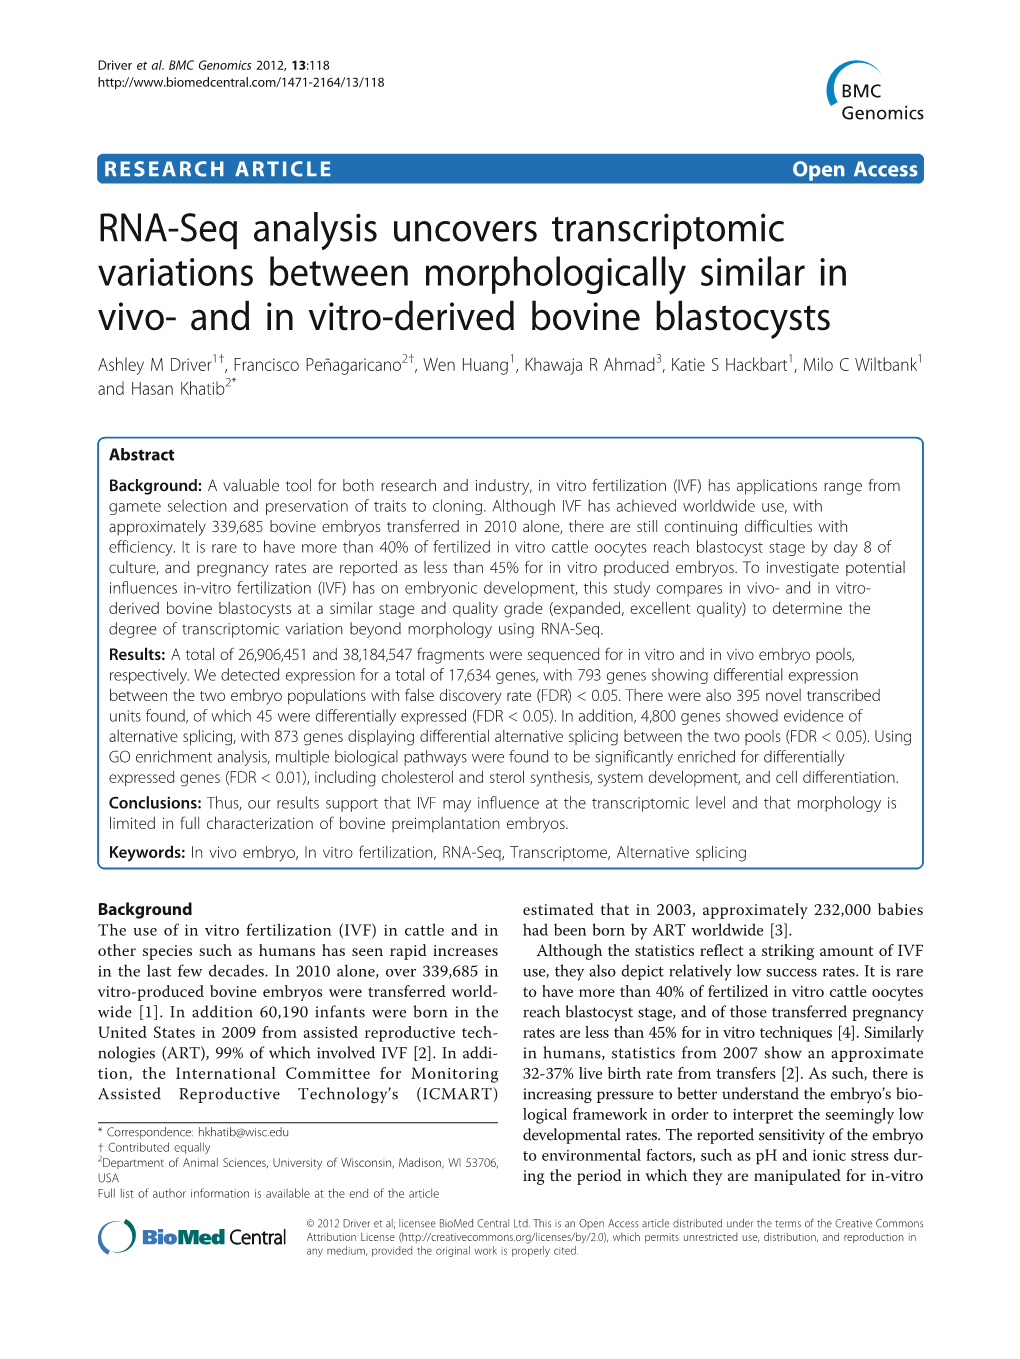 RNA-Seq Analysis Uncovers Transcriptomic Variations Between